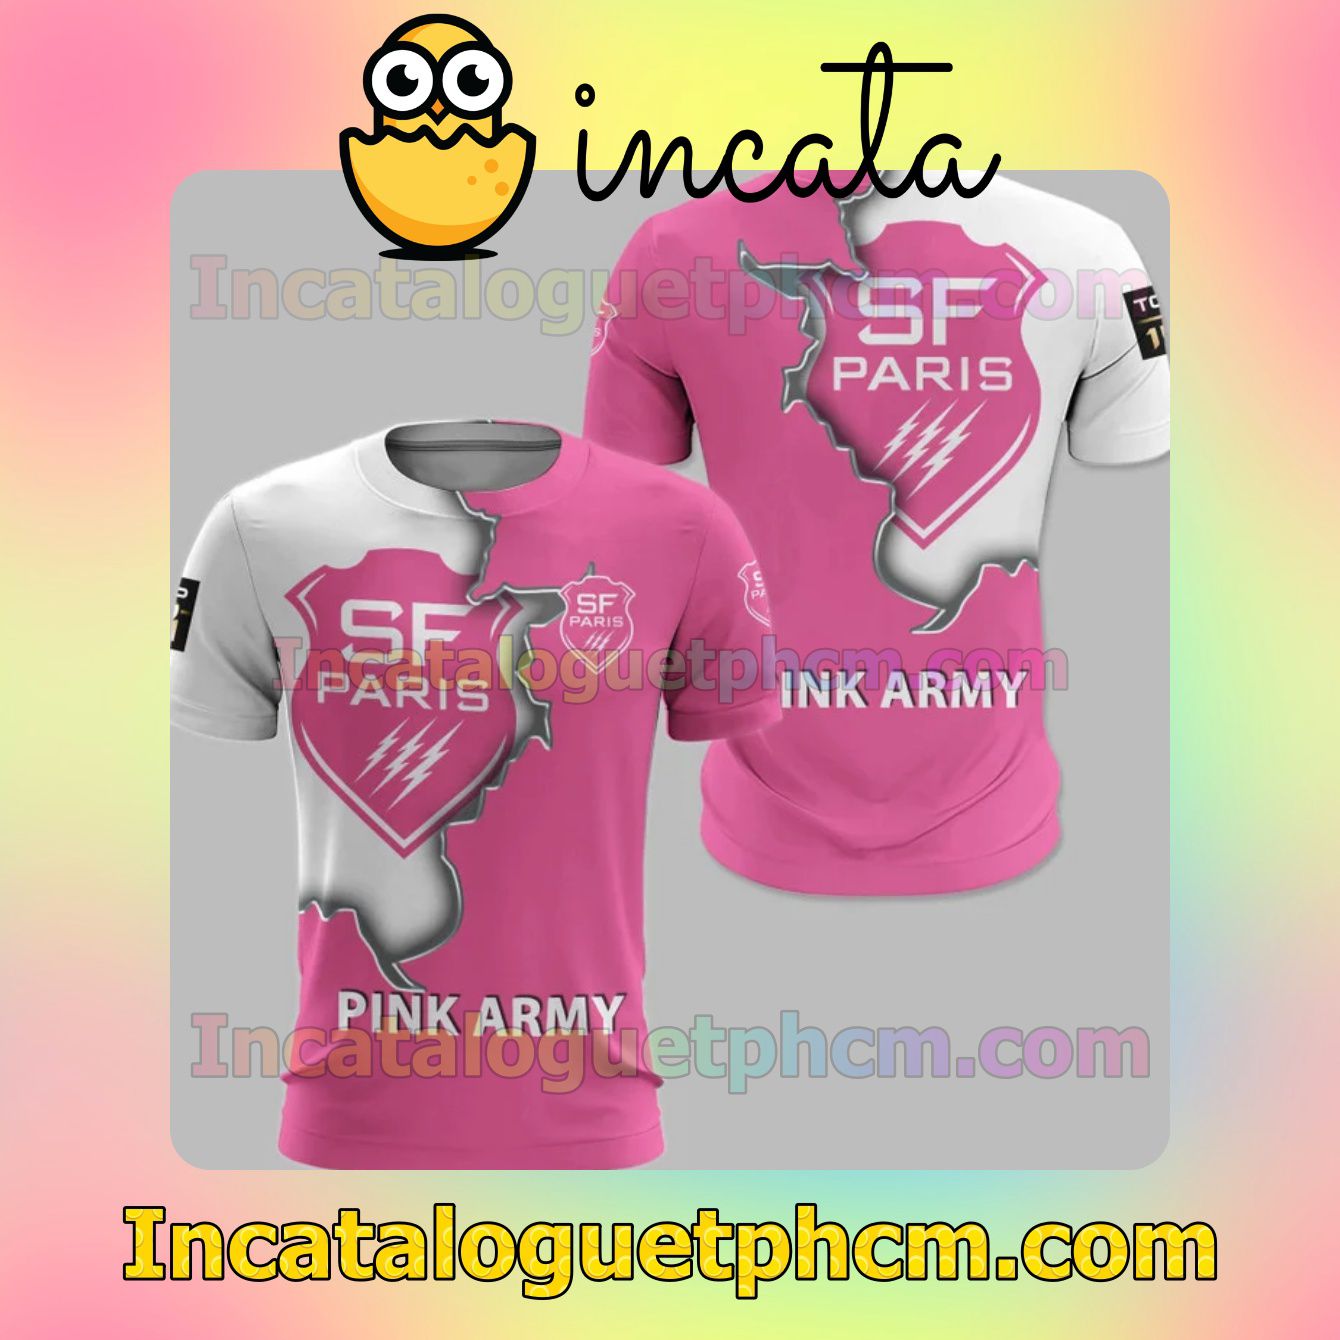 Free Ship Stade Francais Pink Army Long Sleeve Tee Bomber Jacket